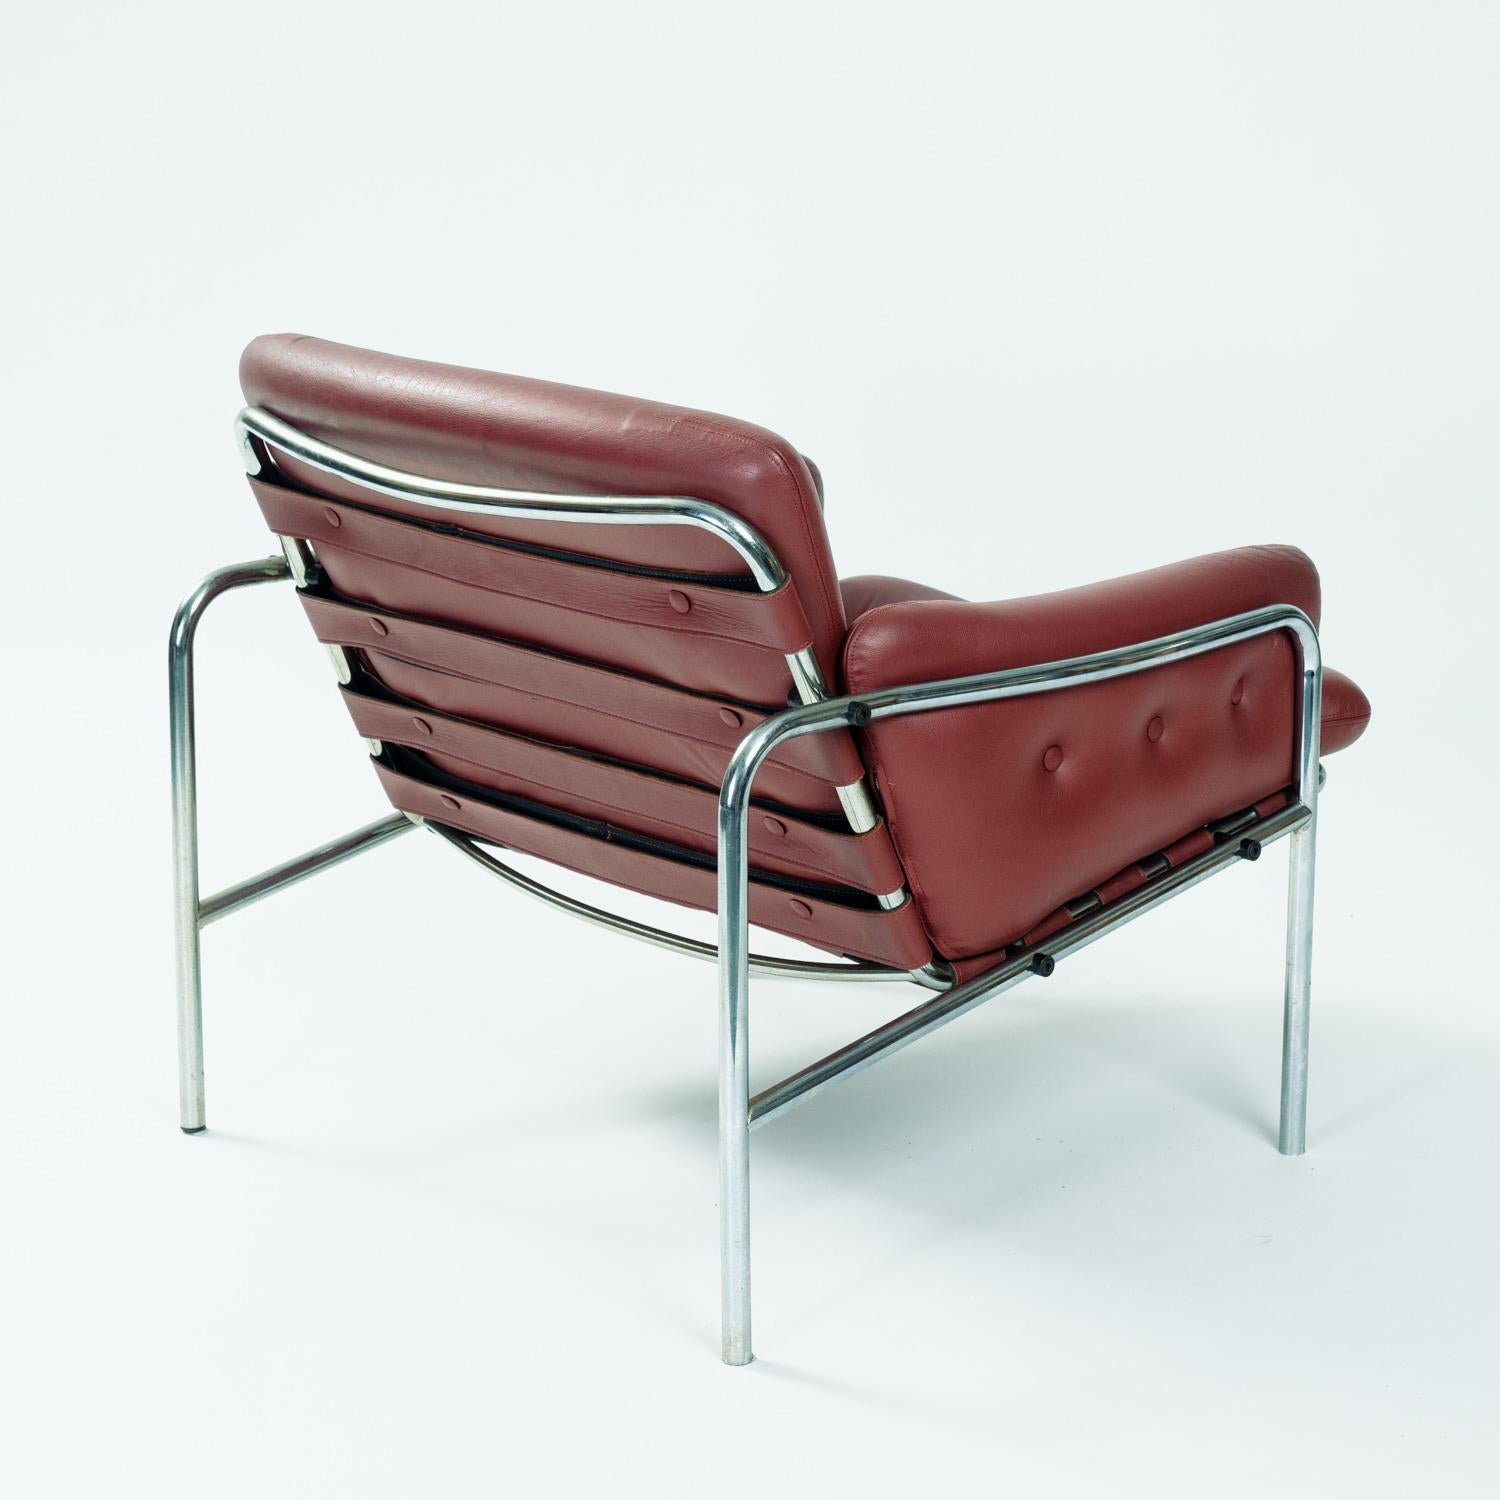 Dutch Martin Visser Osaka burgundy leather lounge chair by 't Spectrum, 1964 For Sale 3